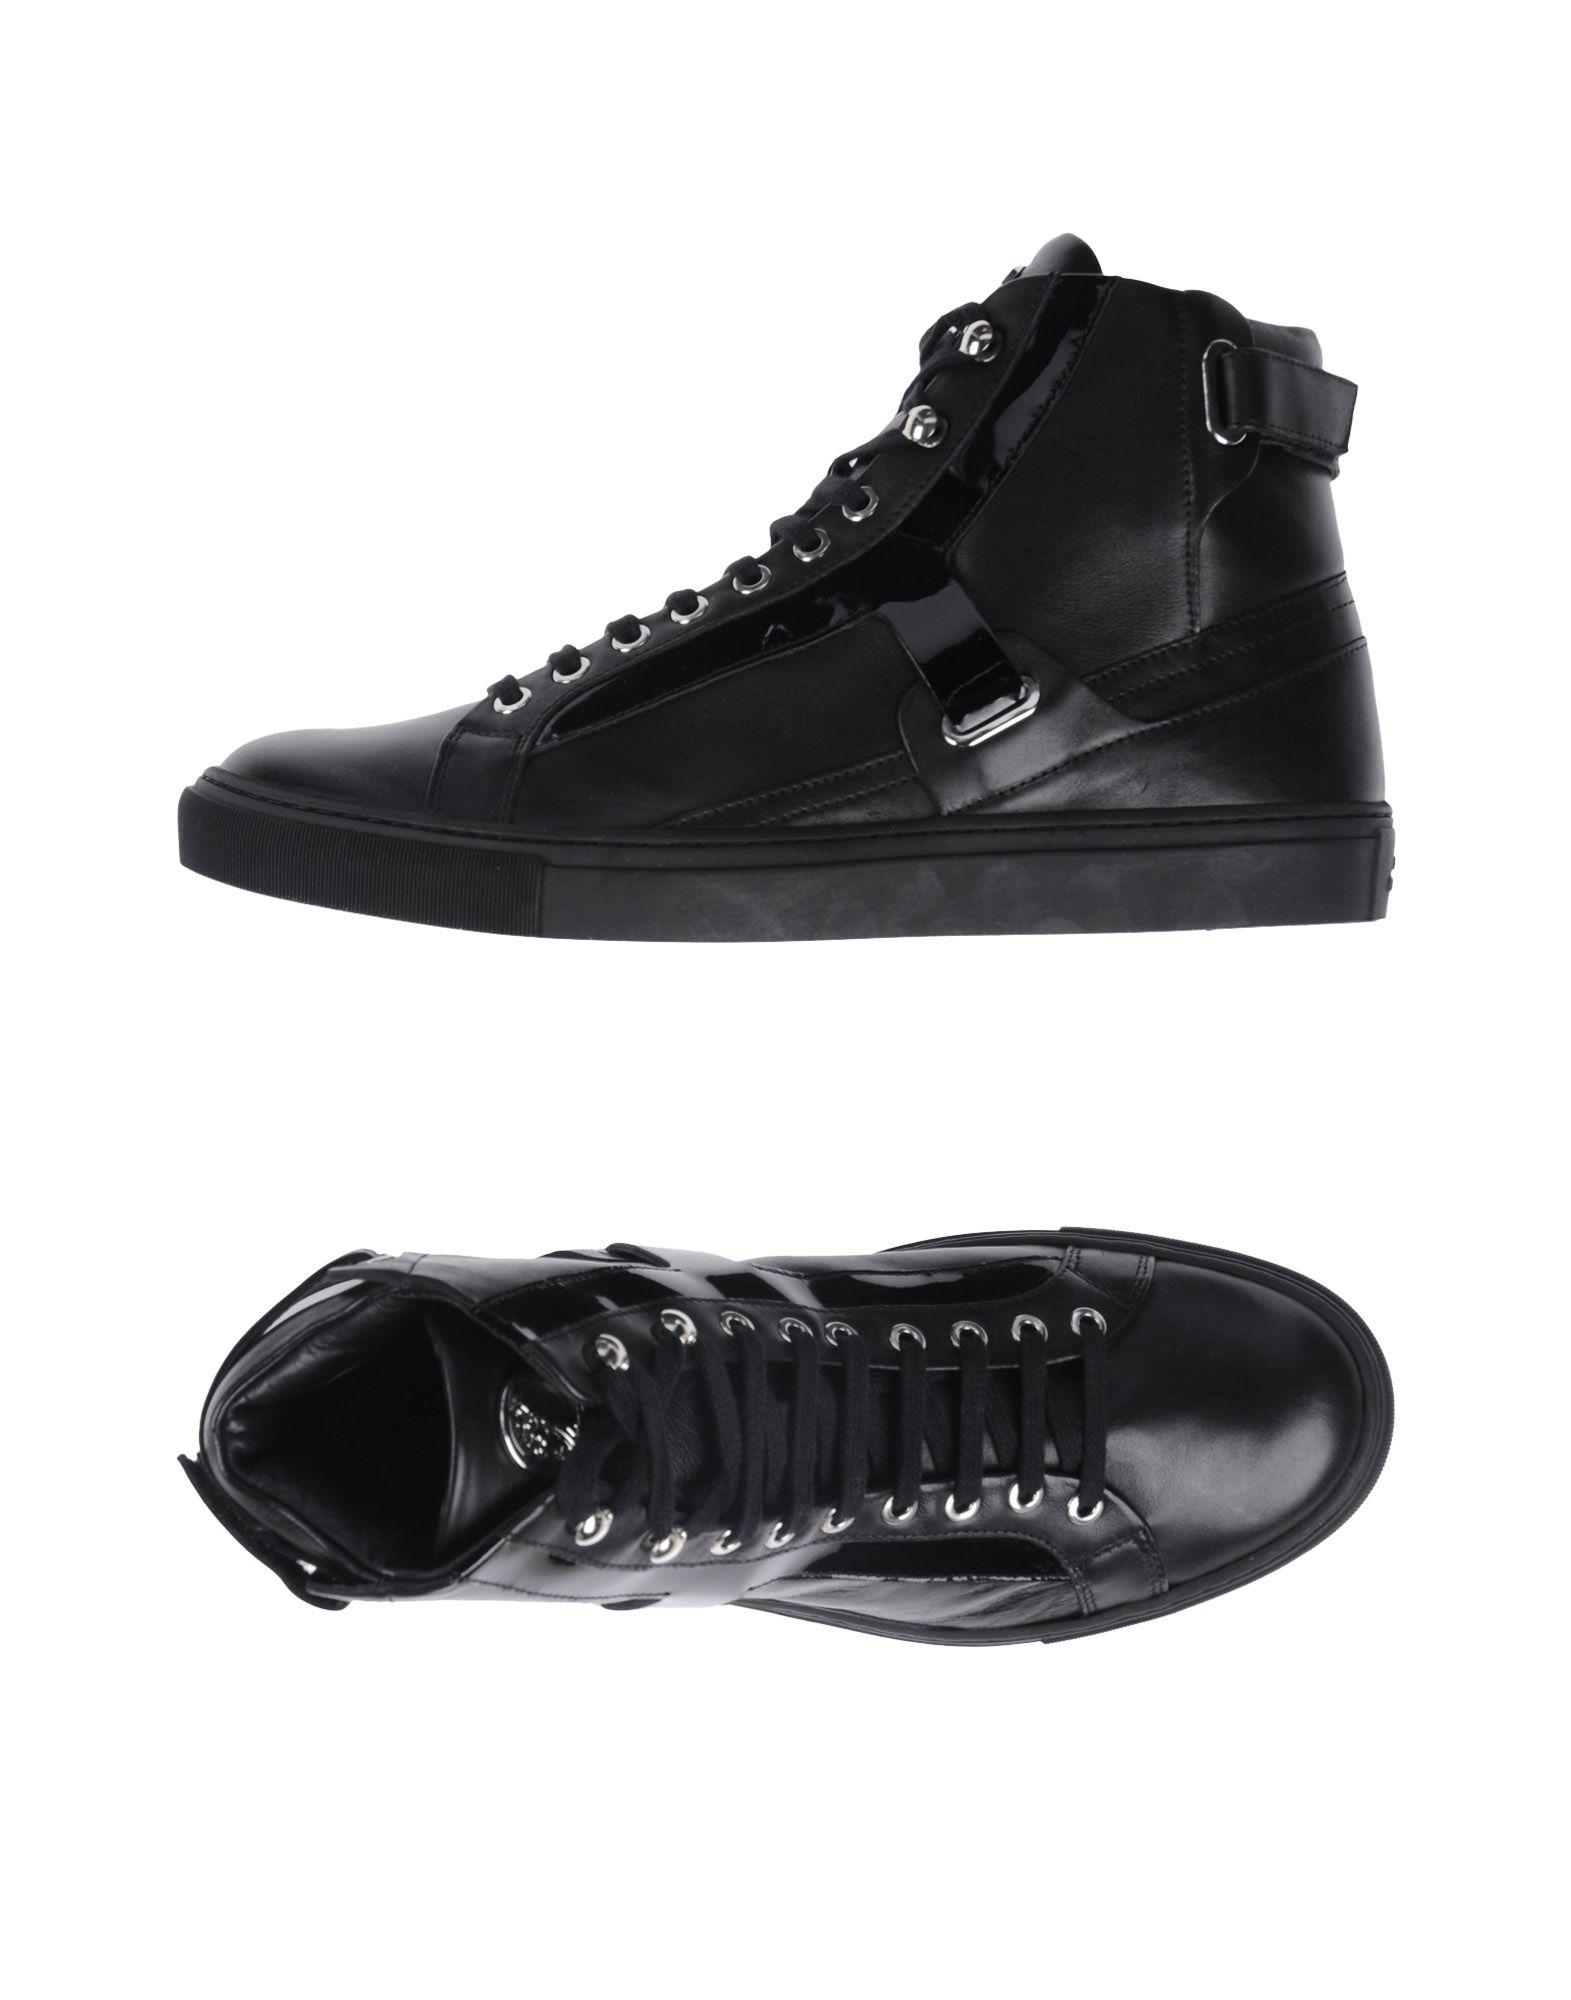 Versace High-tops & Sneakers in Black for Men - Lyst